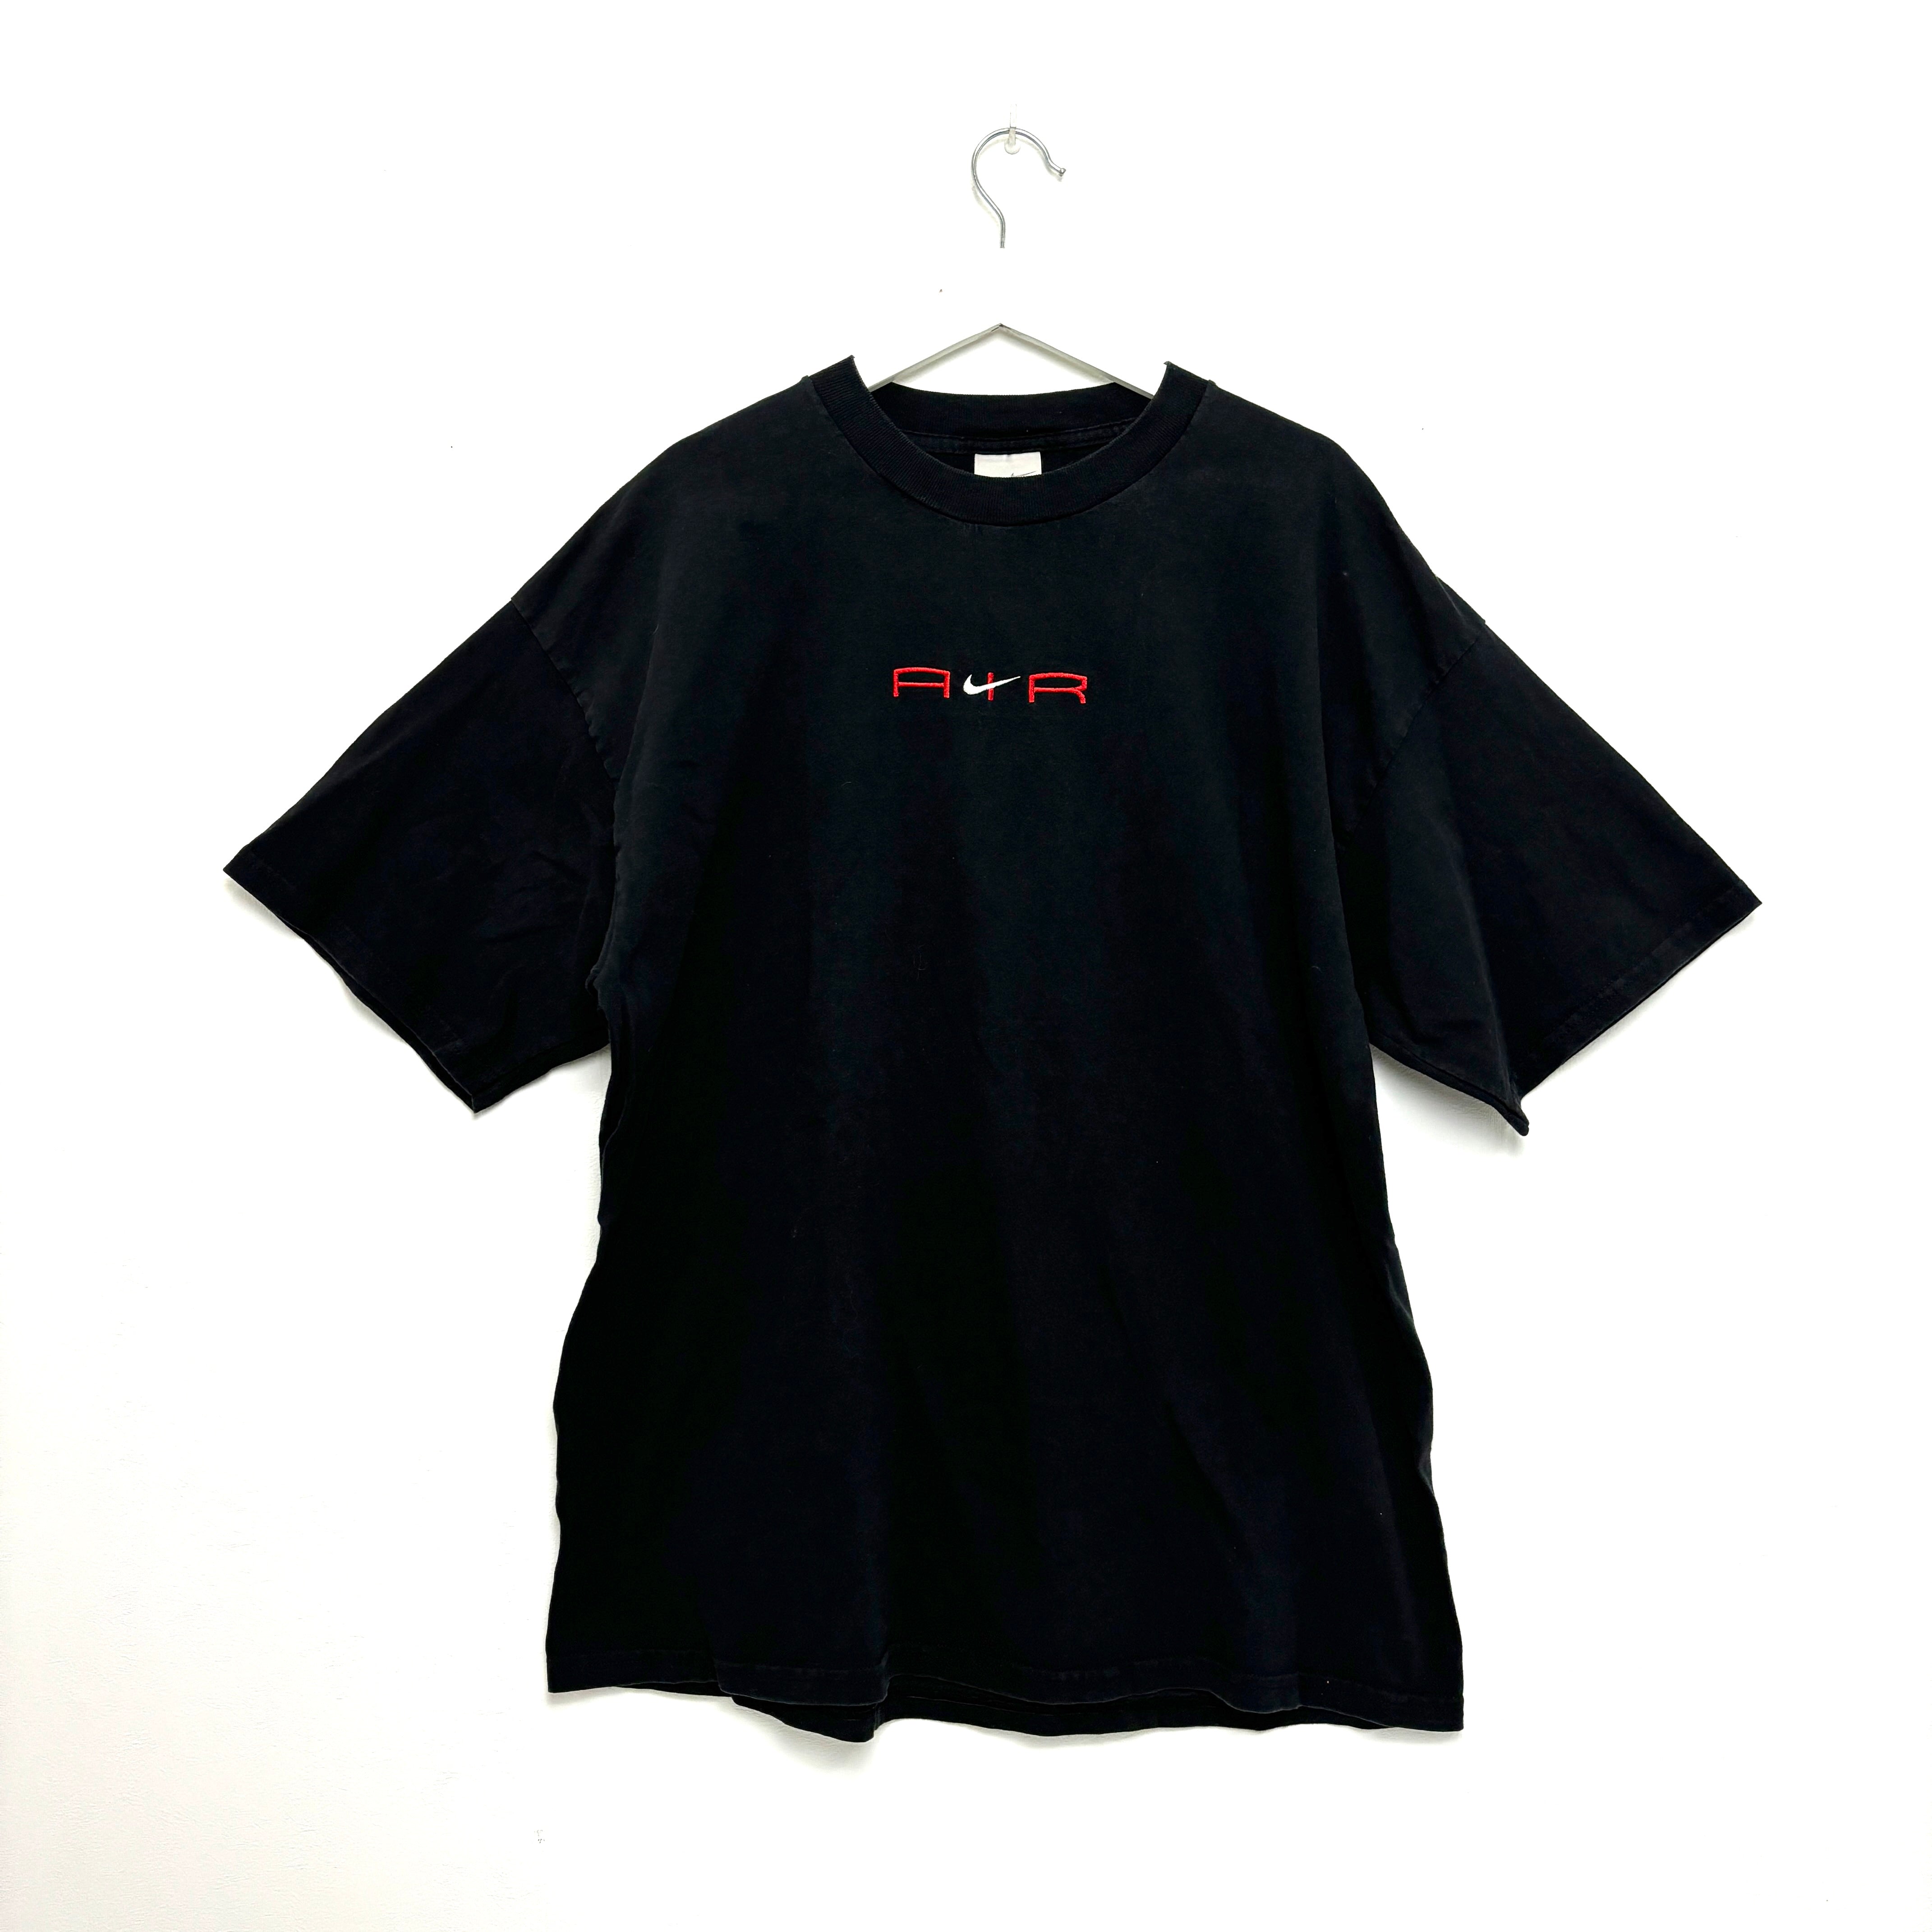 00s NIKE Air logo Embroidered T-Shirt Black Tee